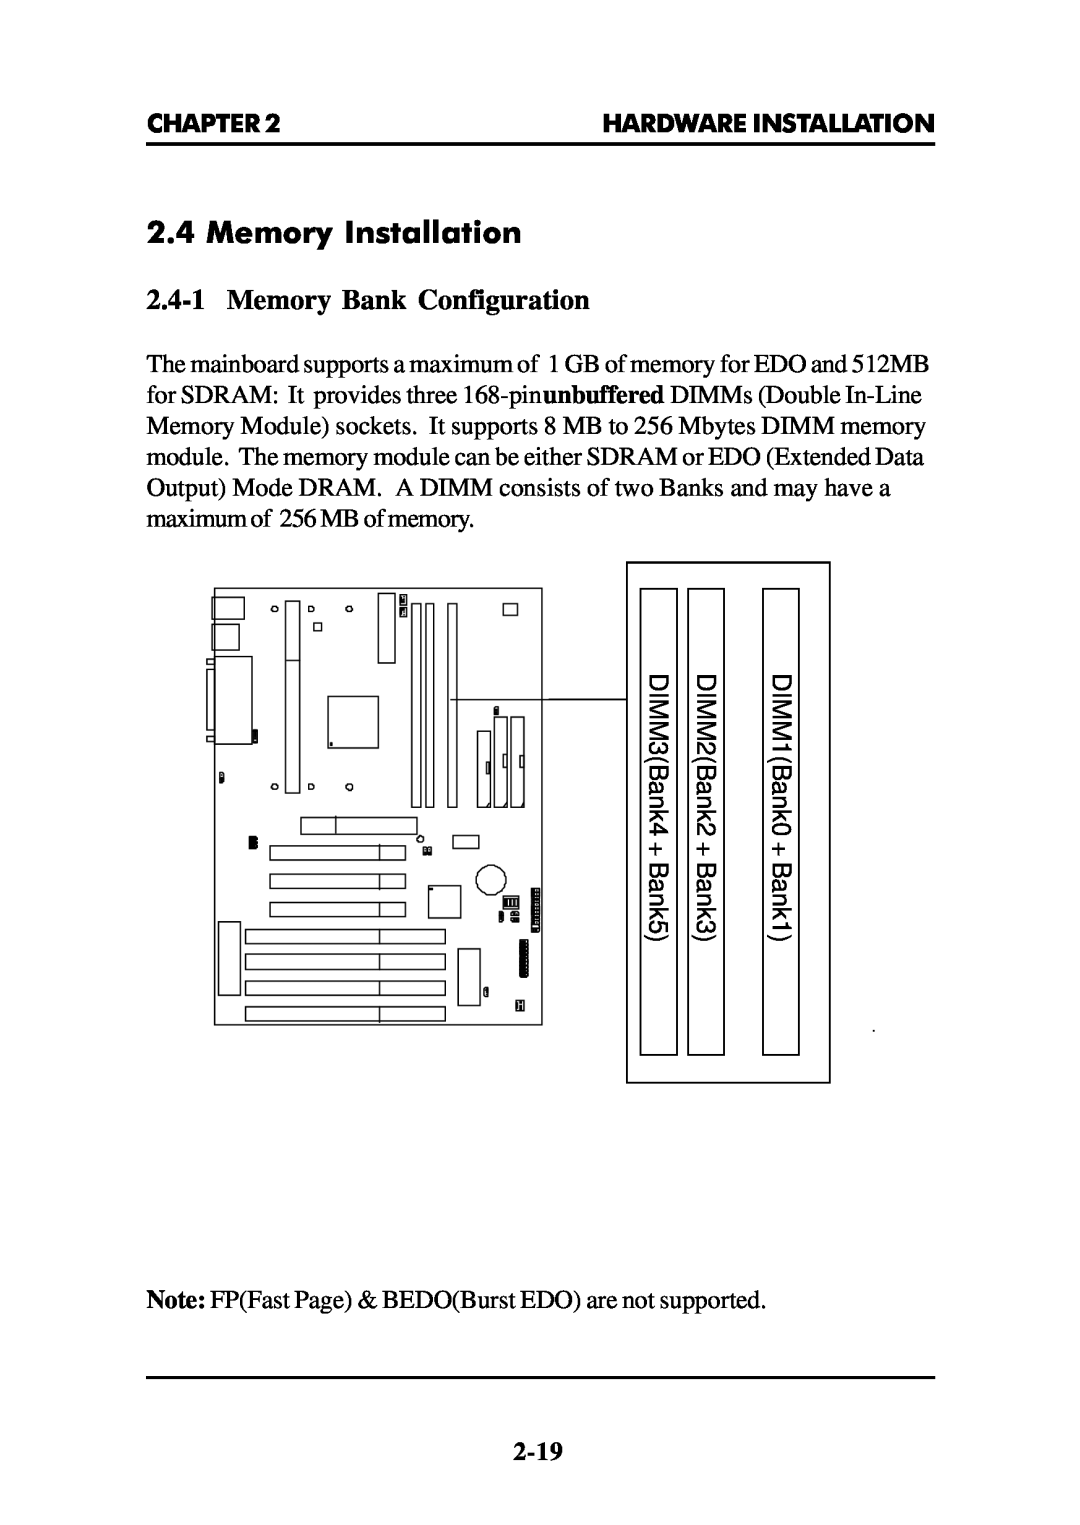 Intel MS-6112 manual Memory Installation, 2.4-1Memory Bank Configuration 